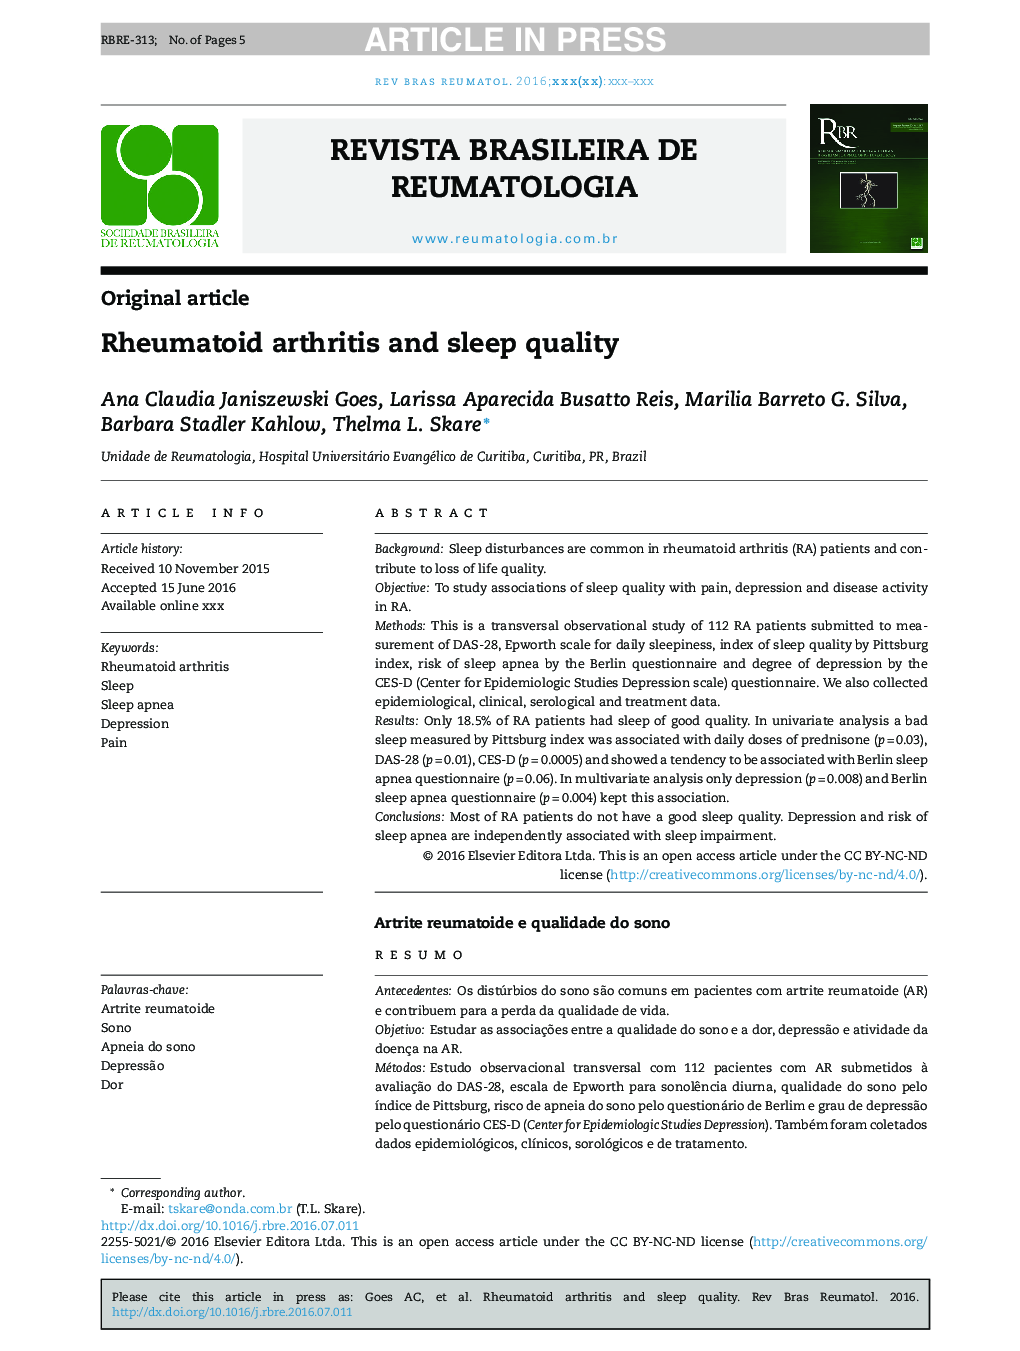 Rheumatoid arthritis and sleep quality